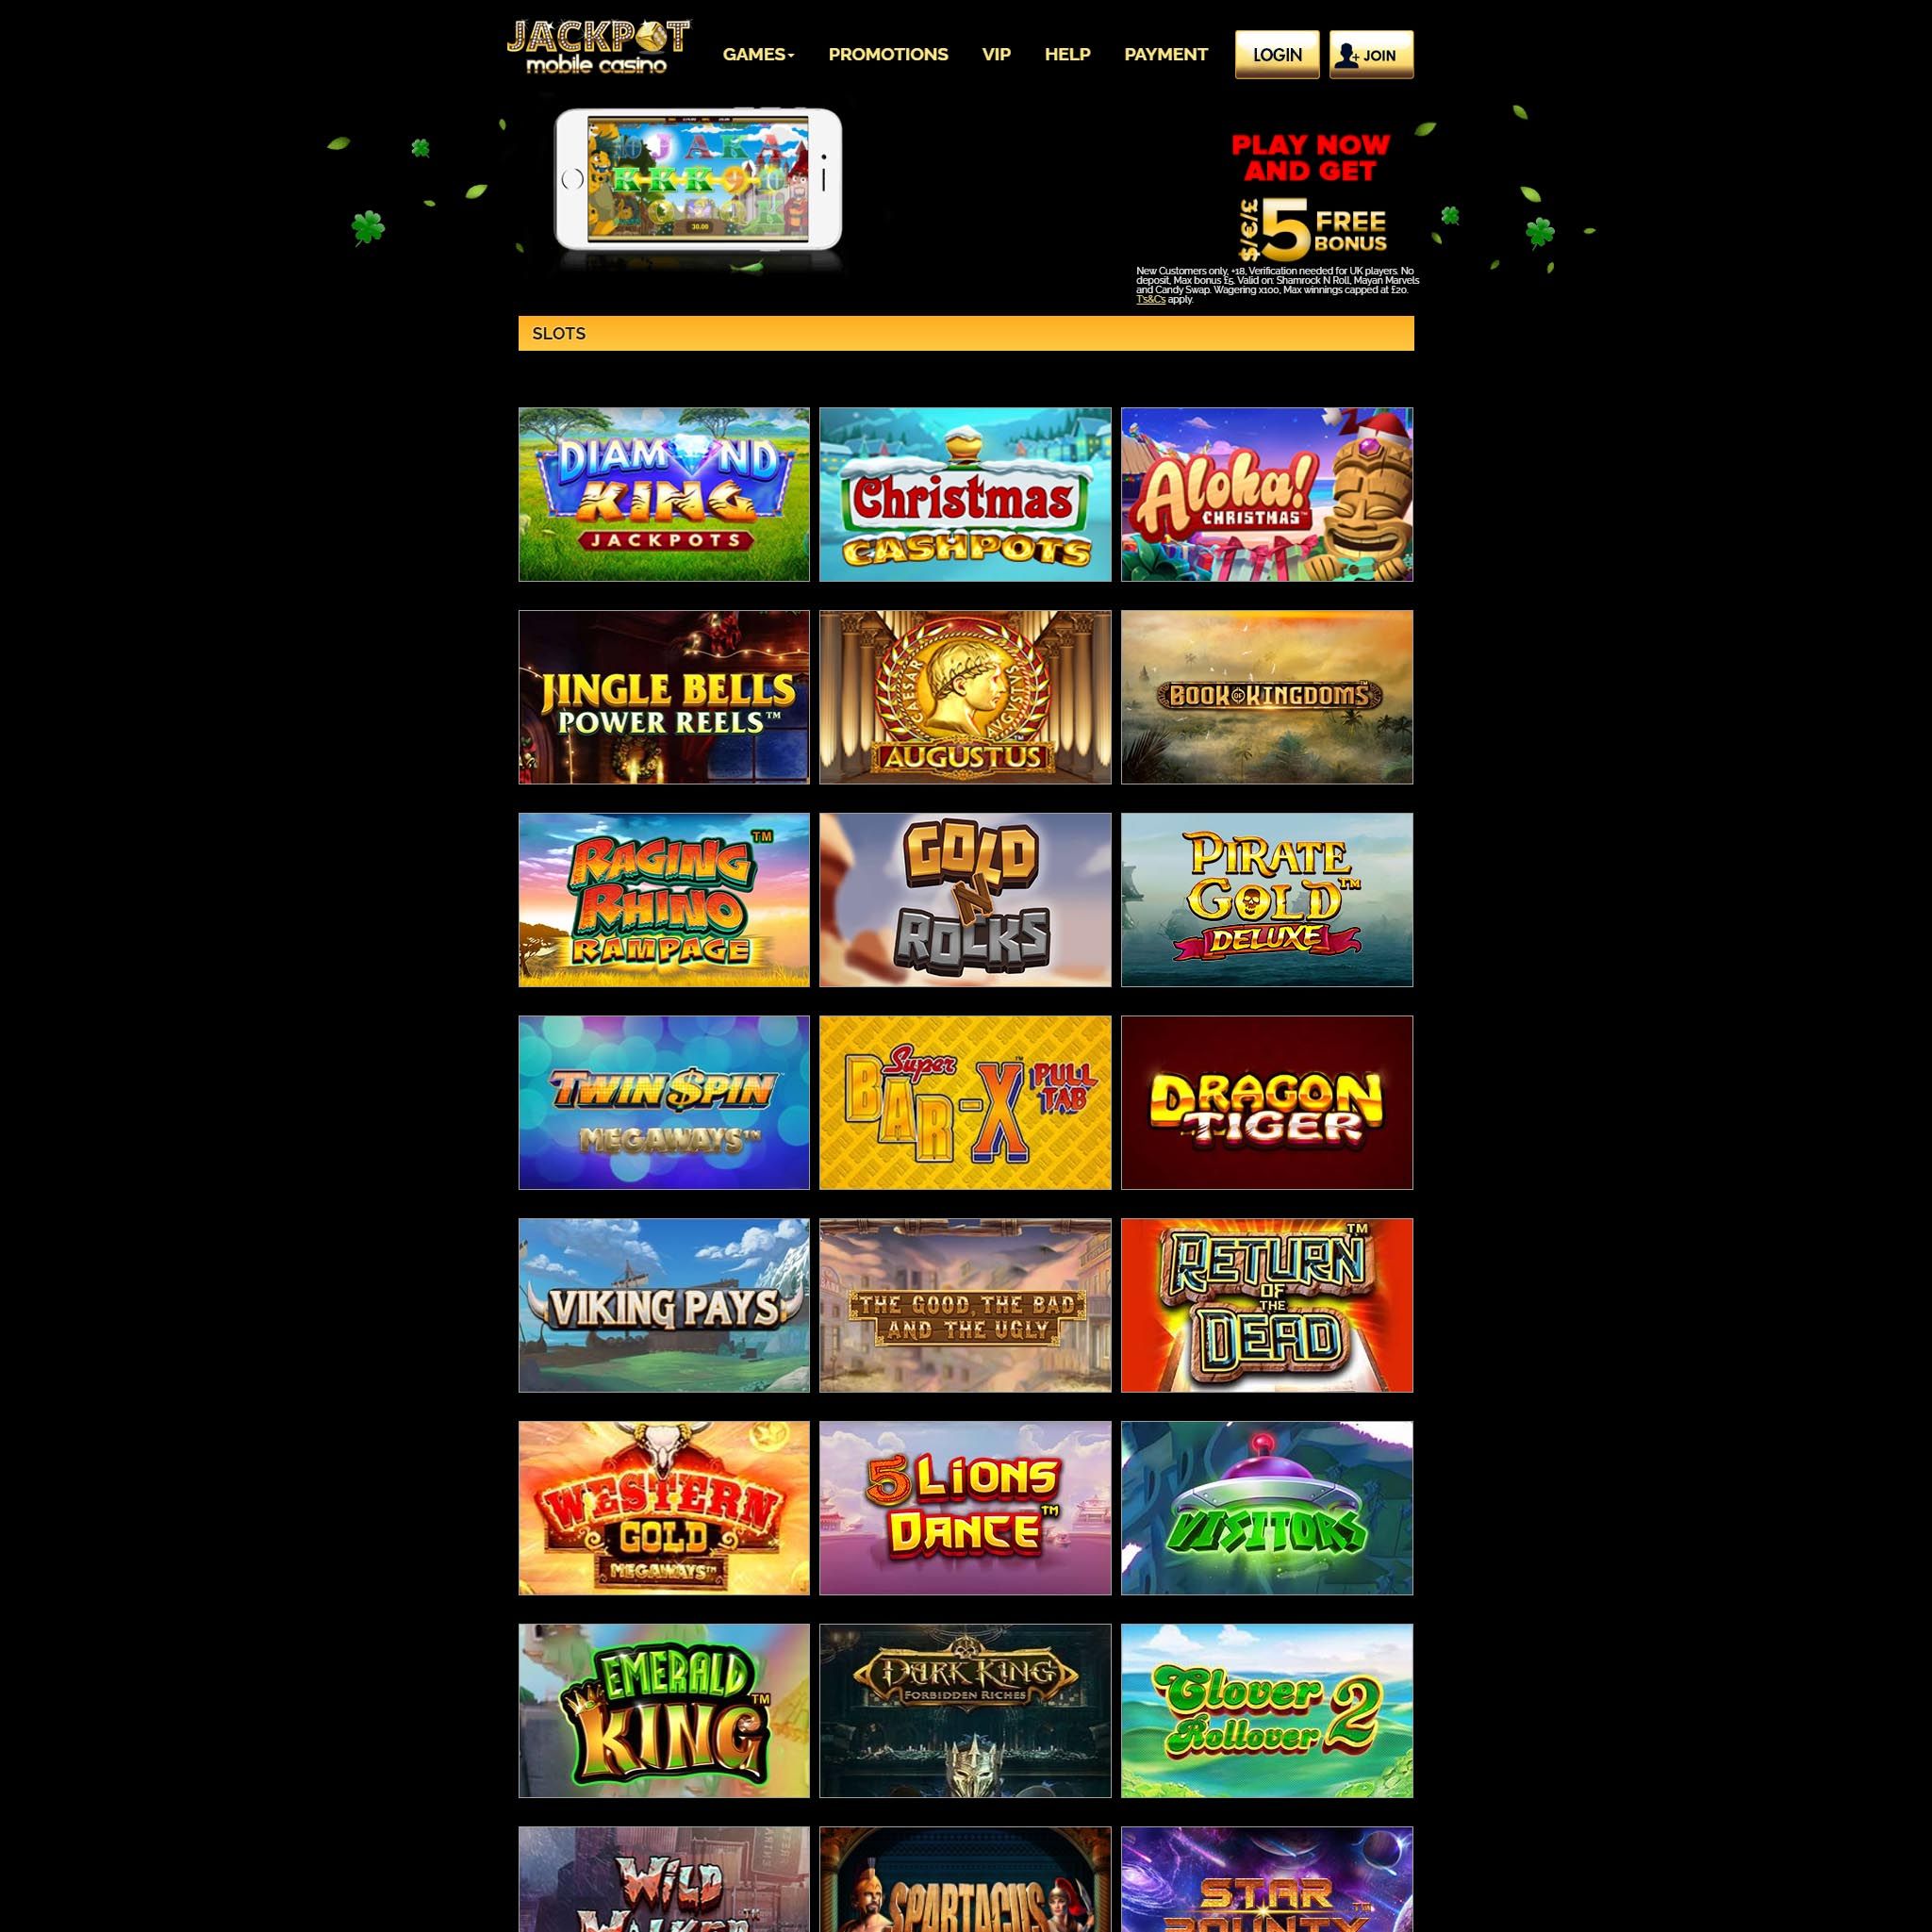 Jackpot Mobile Casino full games catalogue